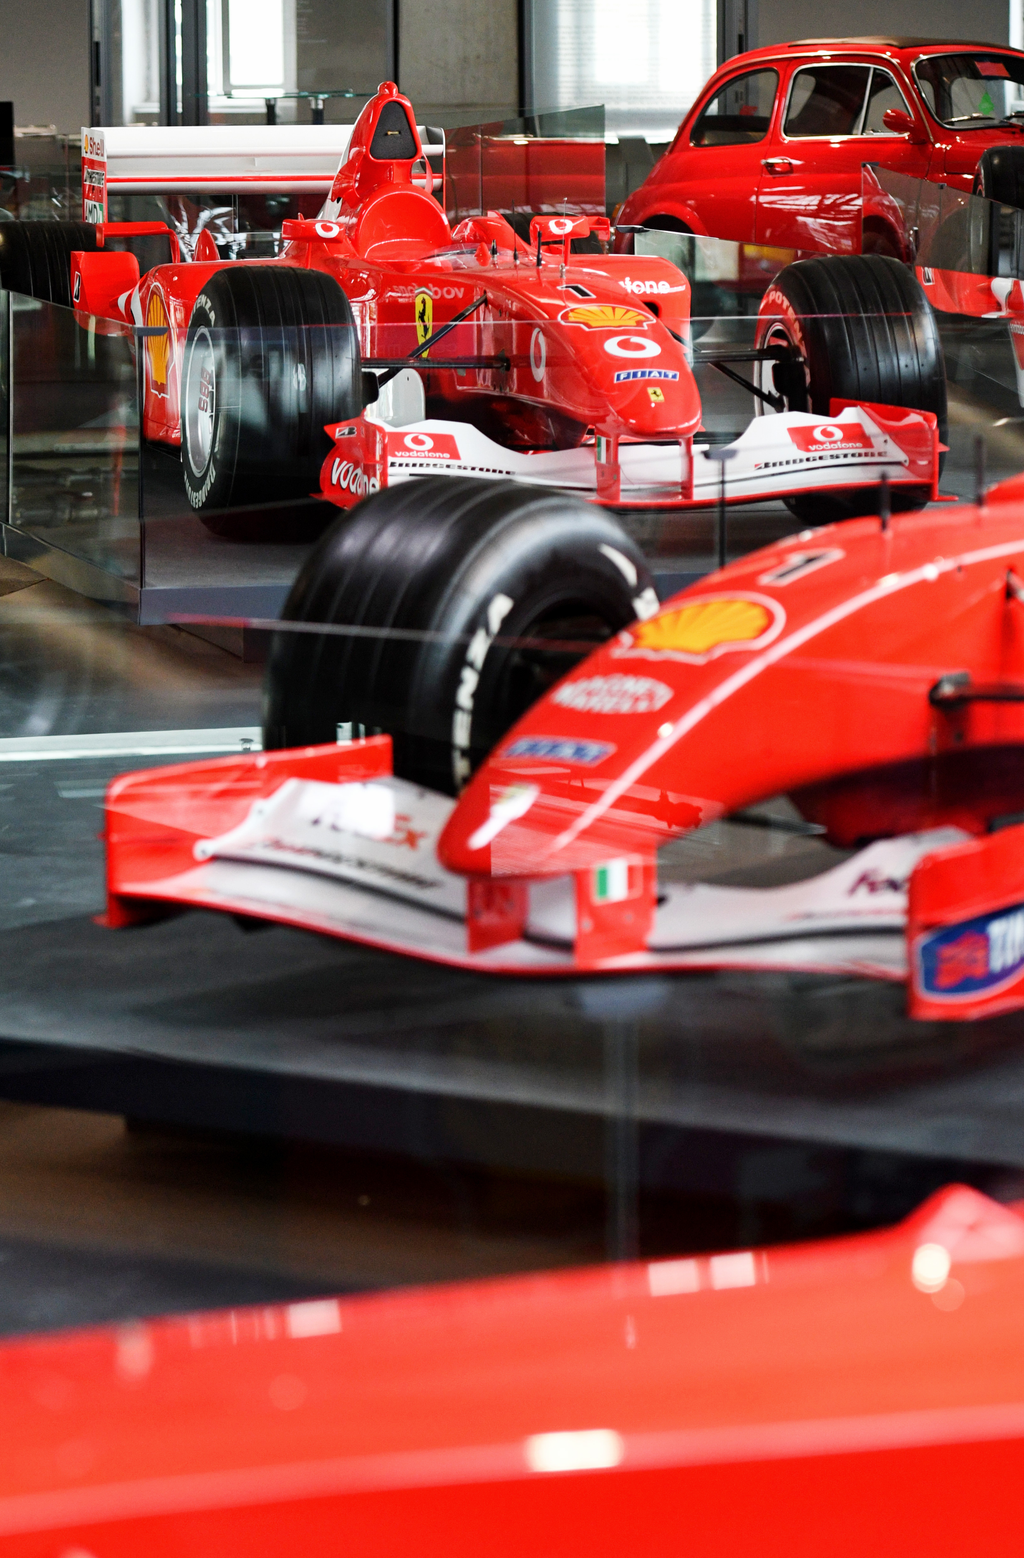 Forma-1, Michael Schumacher autógyűjteménye, Motorworld, Ferrari F2001, Ferrari F2002 